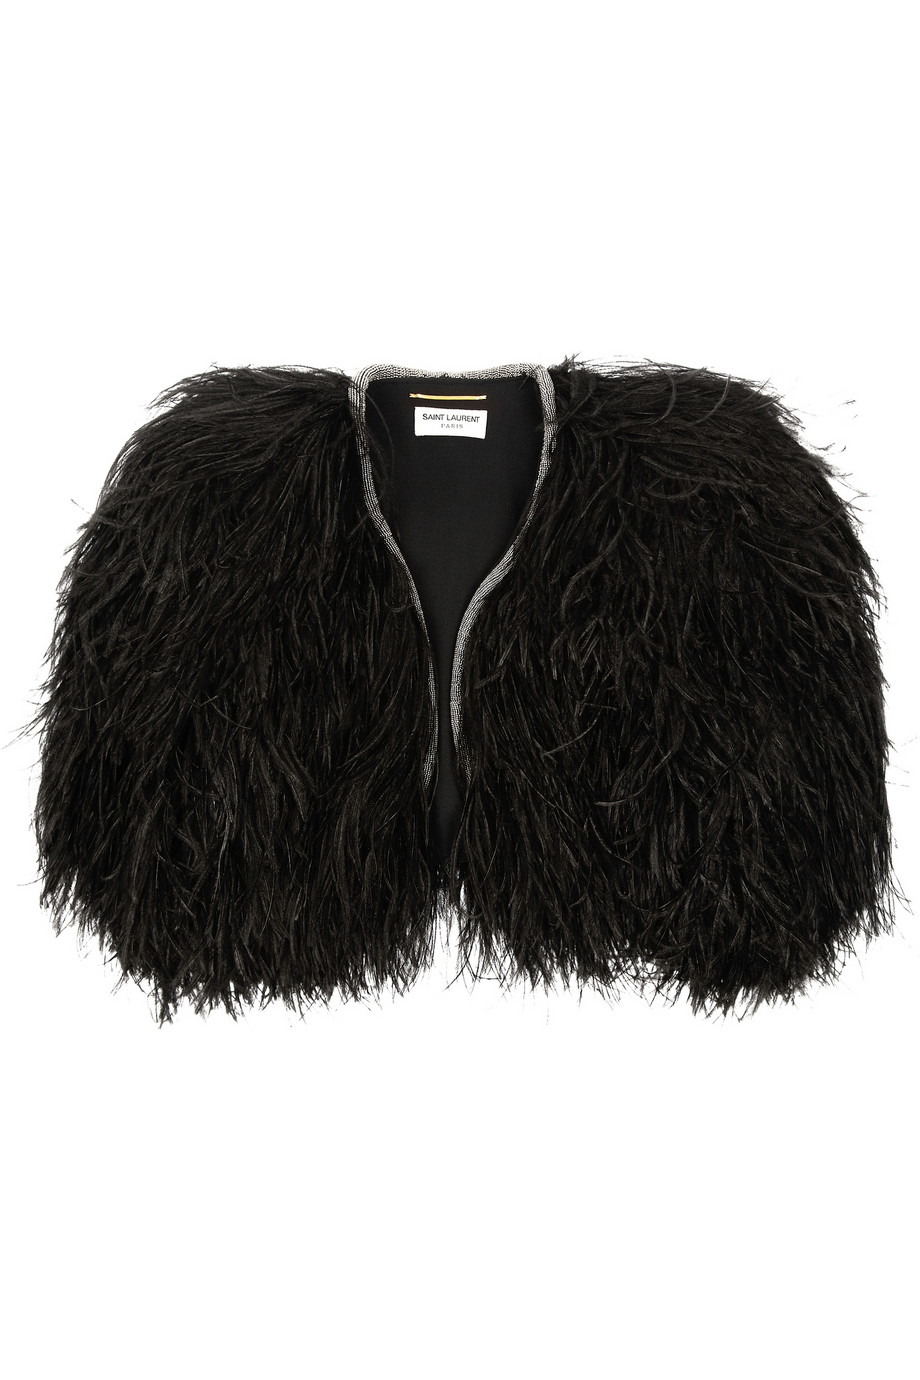 Saint Laurent Ostrich Feather Jacket in Black | Lyst